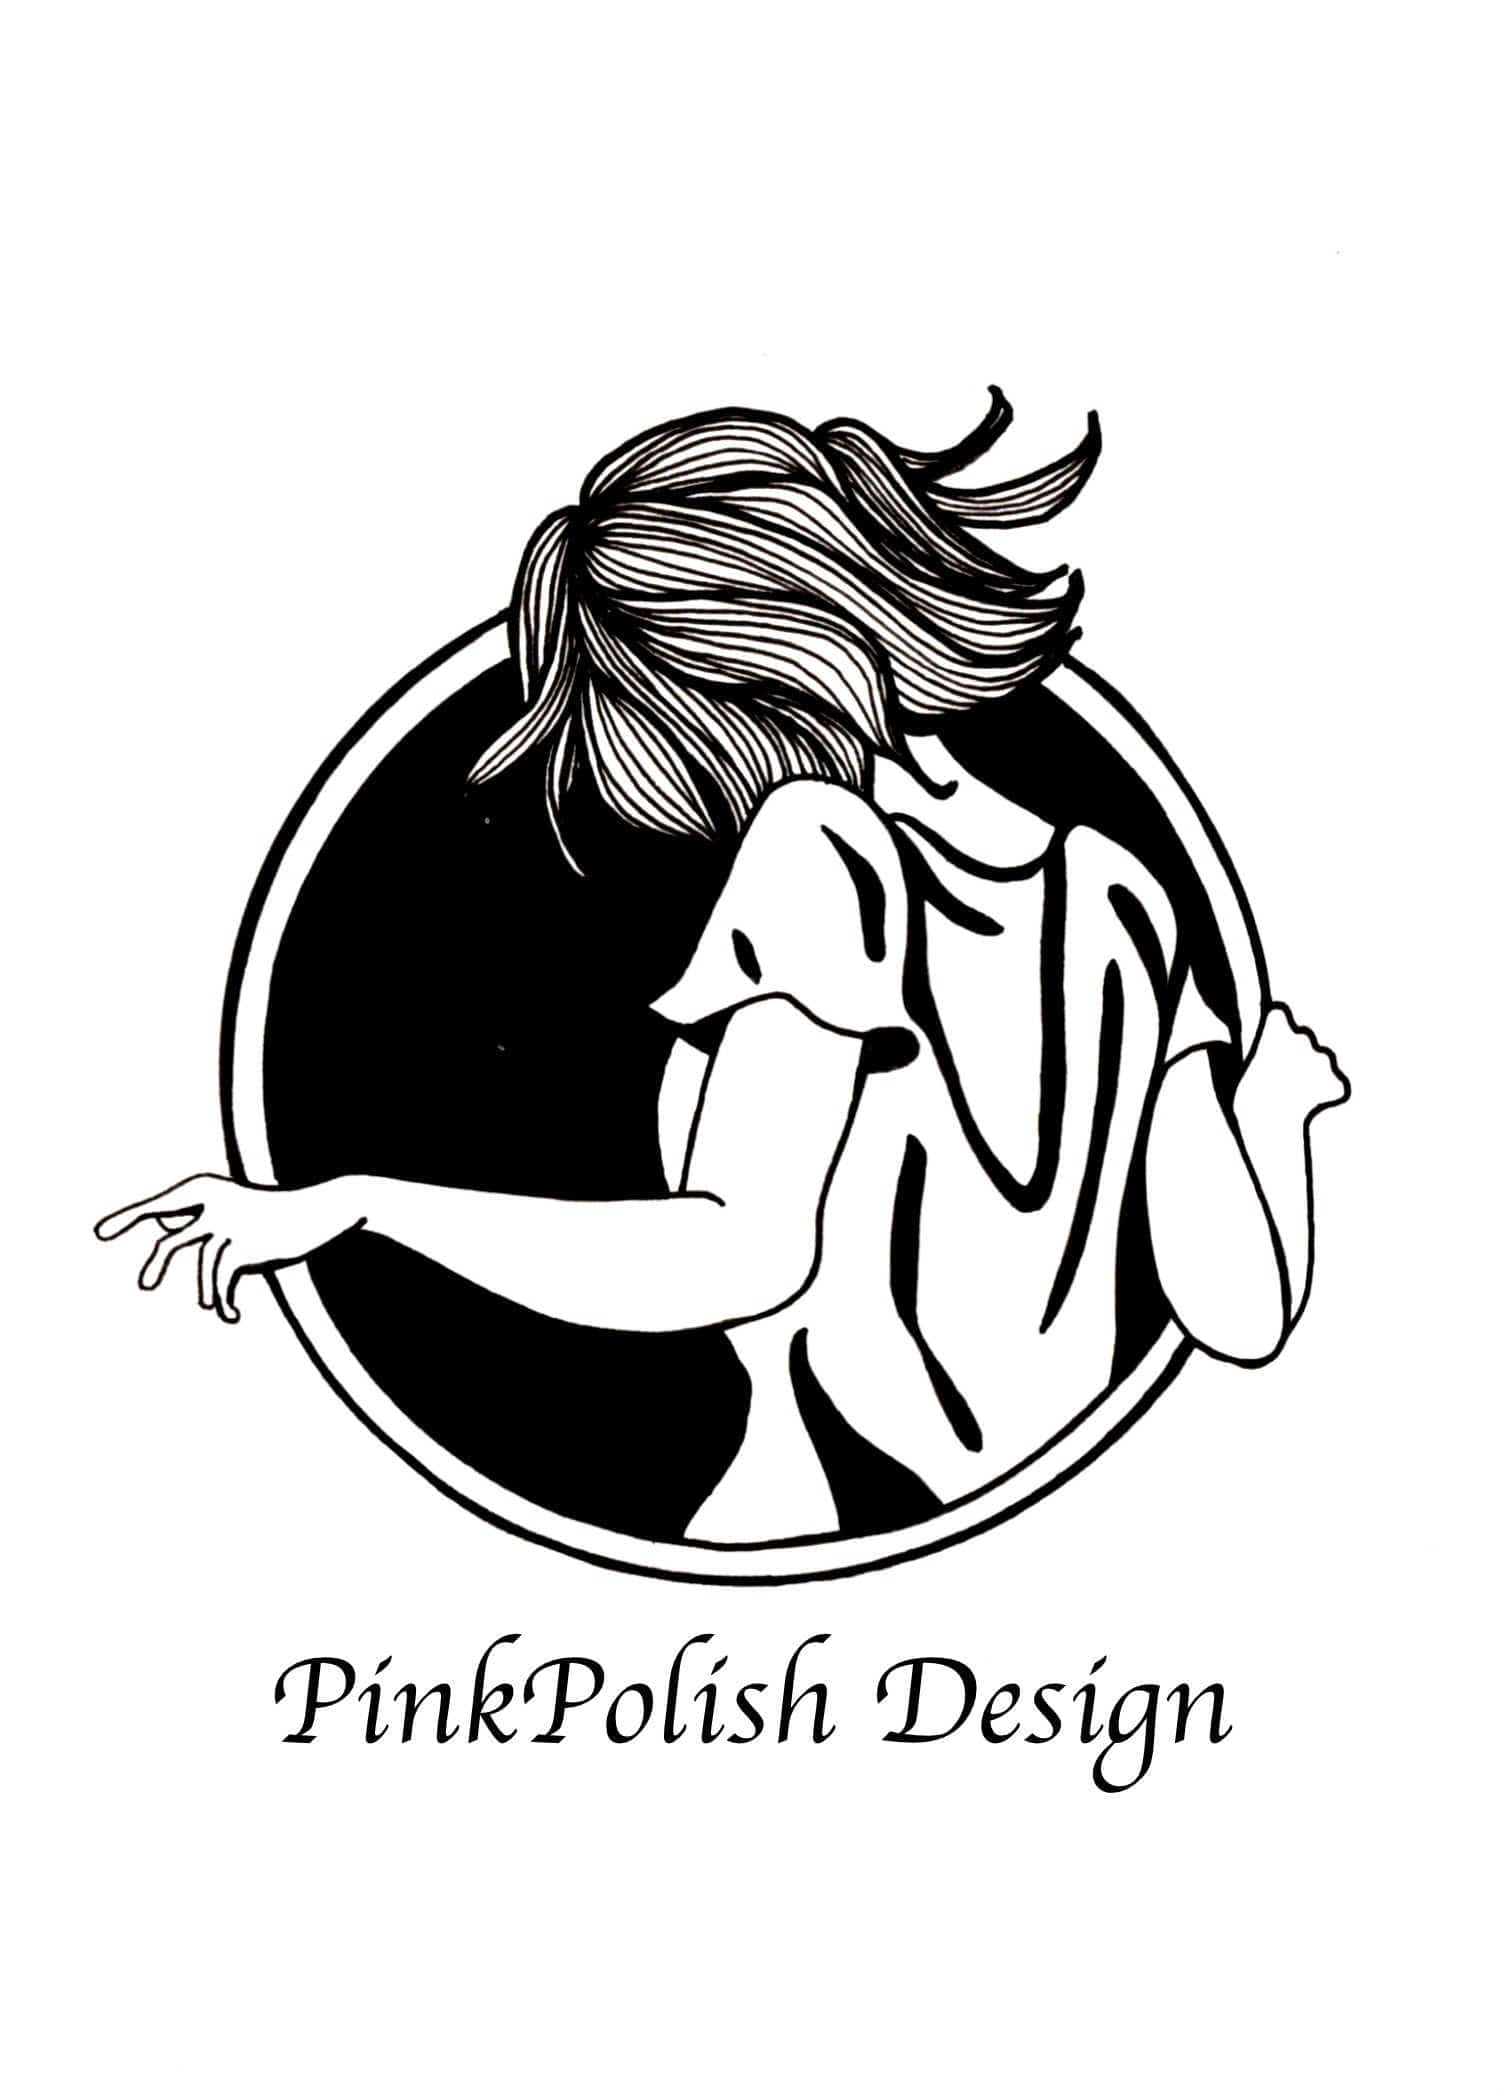 PinkPolish Design Art Prints "Through the Looking Glass" Ink Drawing: Art Print